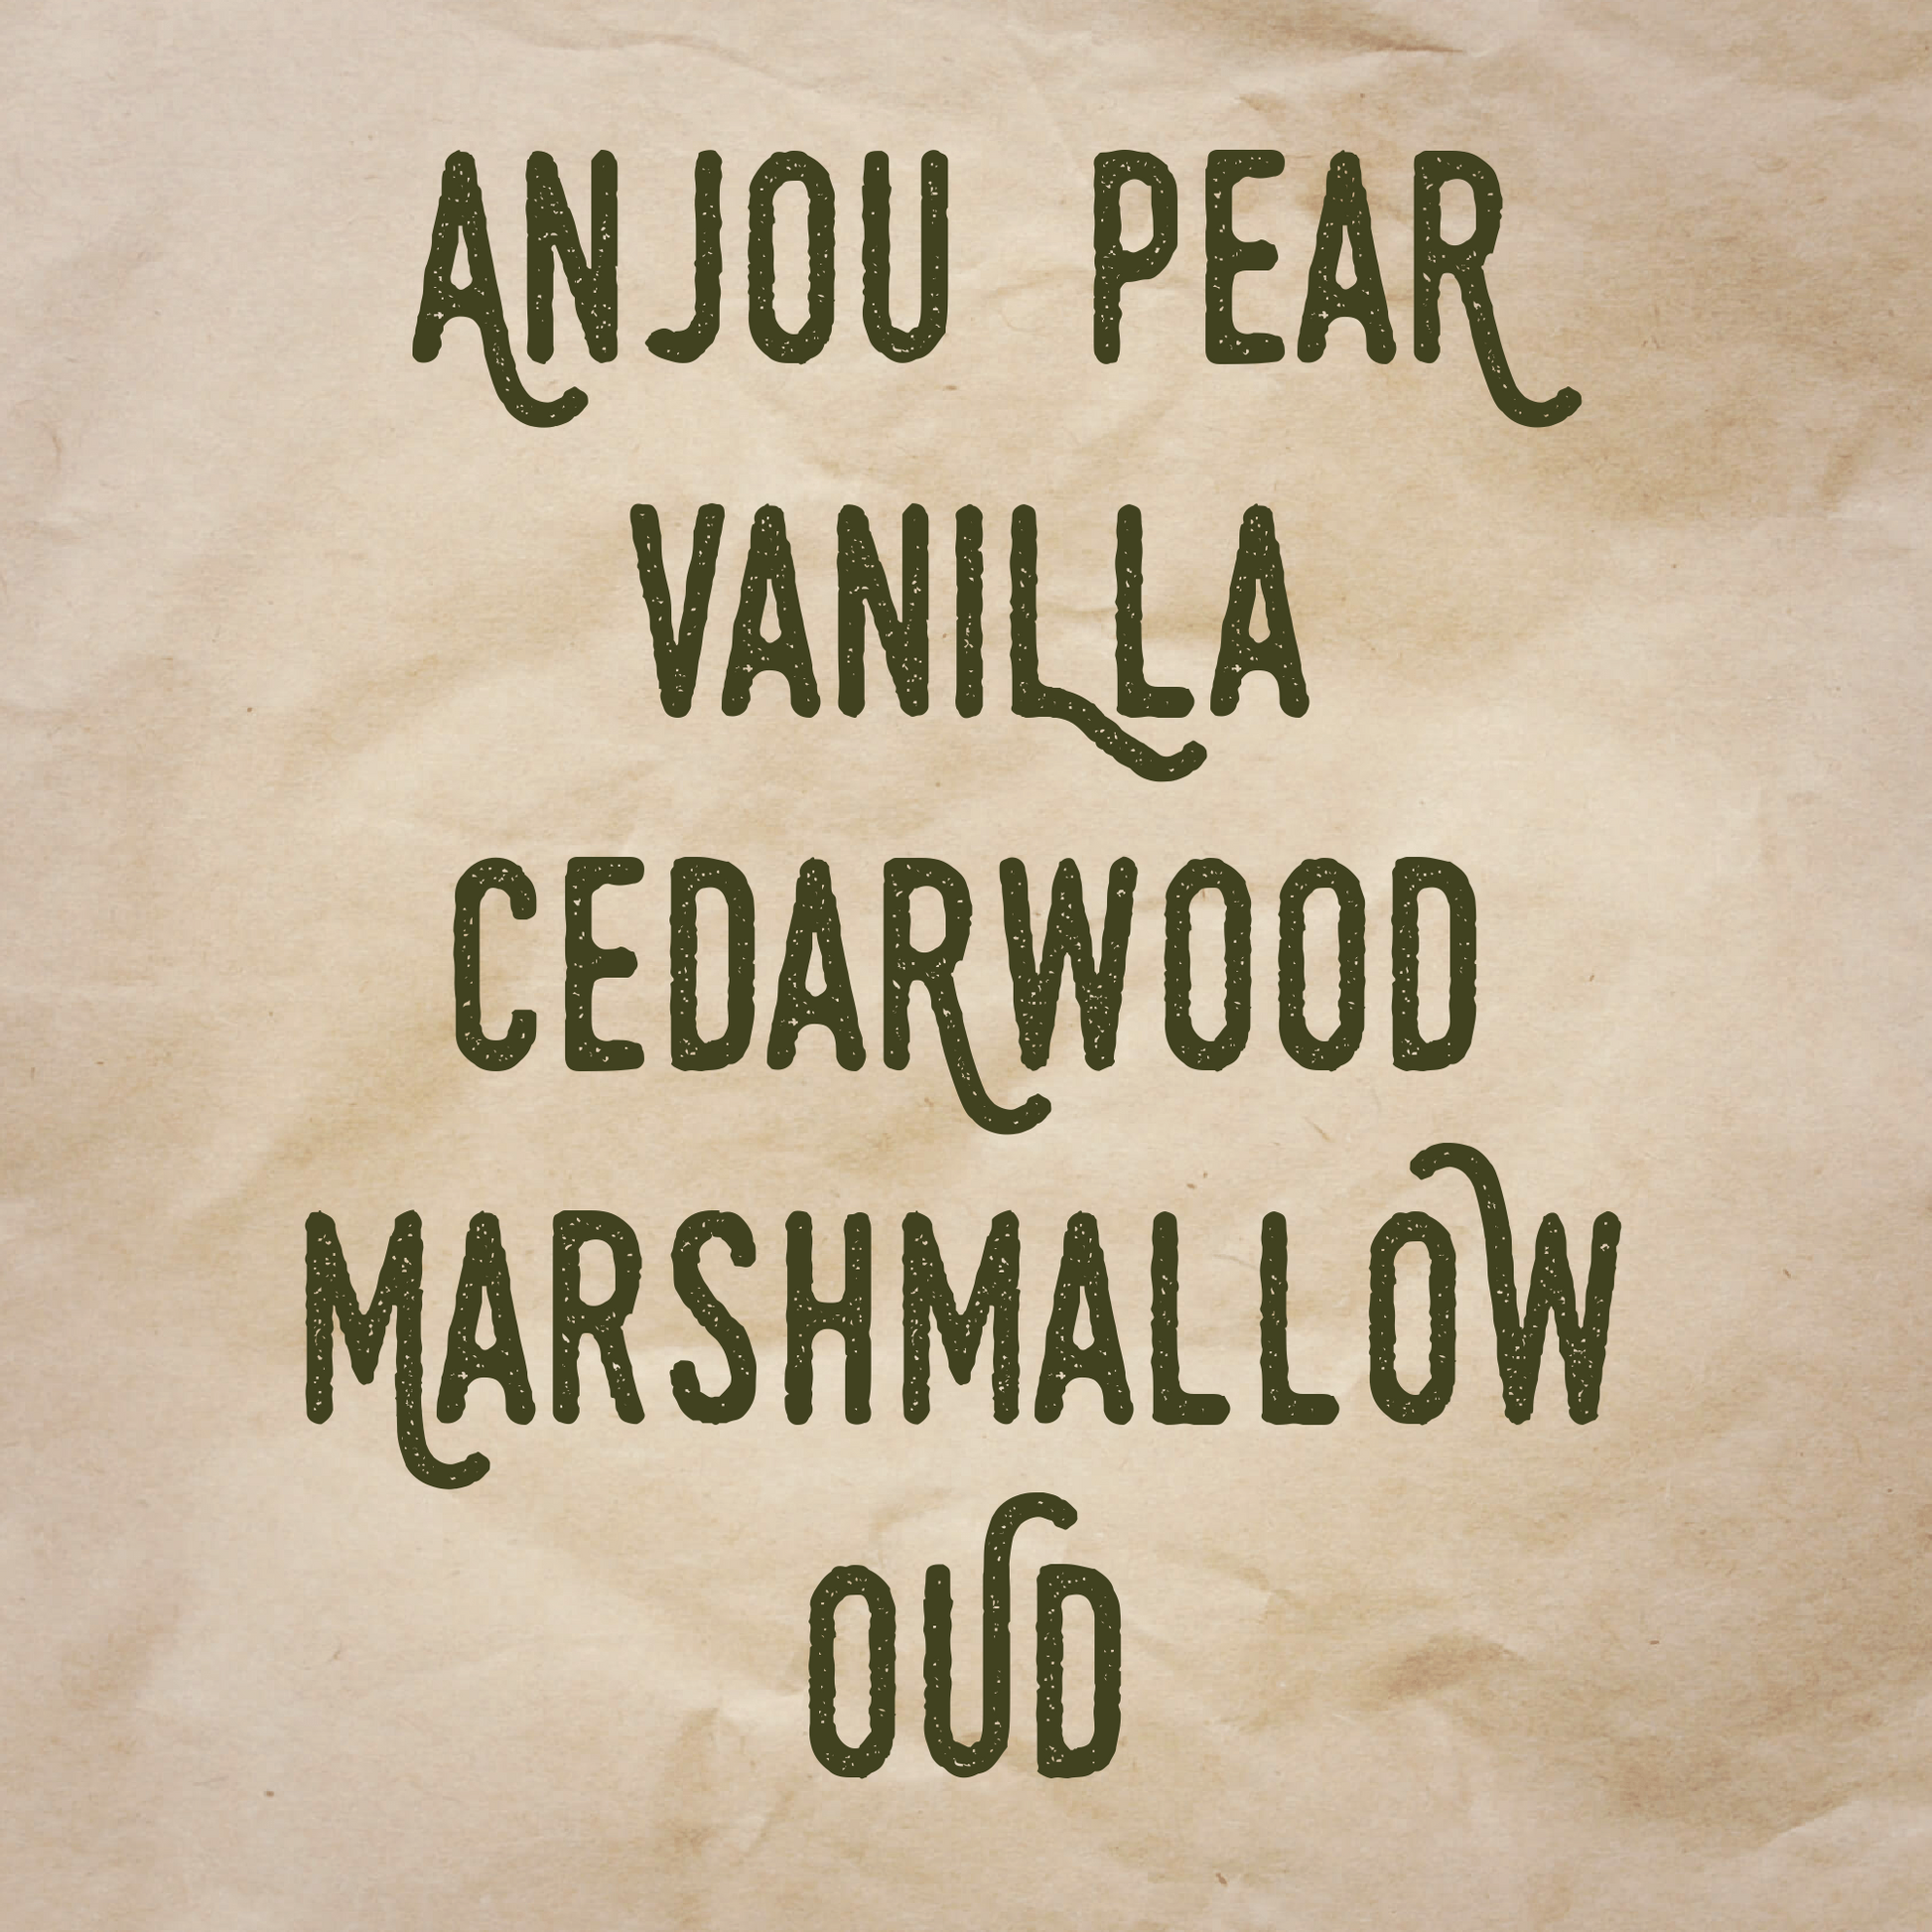 Fake Carl scent notes: Anjou pear, vanilla, cedarwood, marshmallow, and oud.